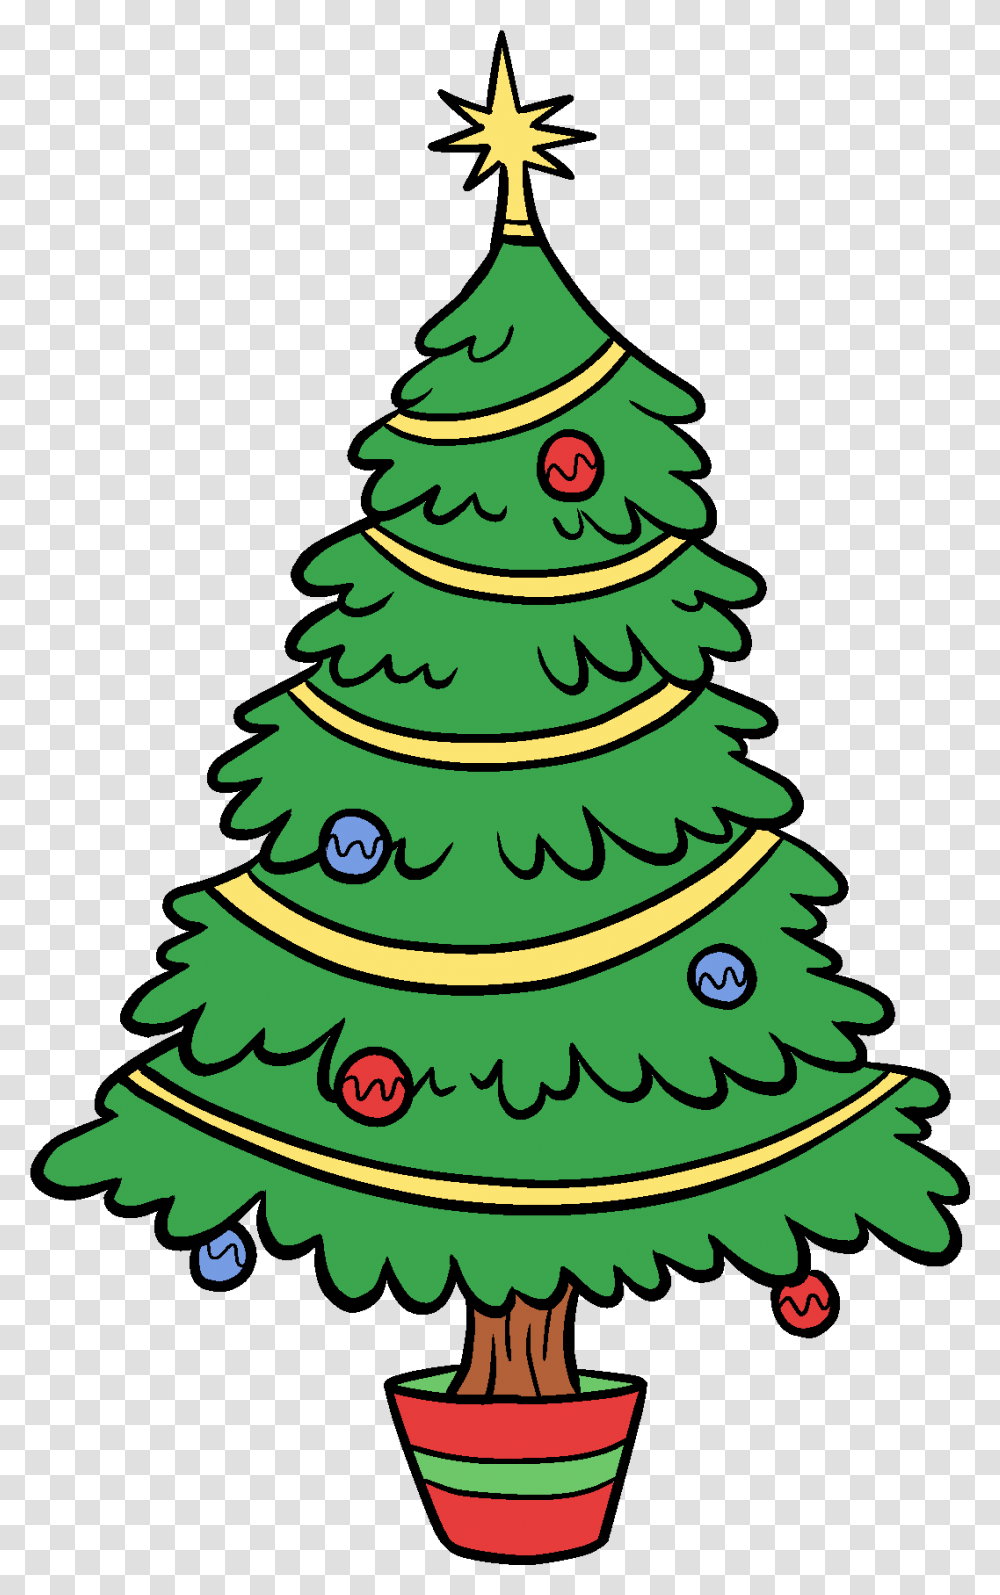 Merry Christmas Tree Drawing Clip Art Christmas Logo, Plant, Ornament, Wedding Cake, Dessert Transparent Png